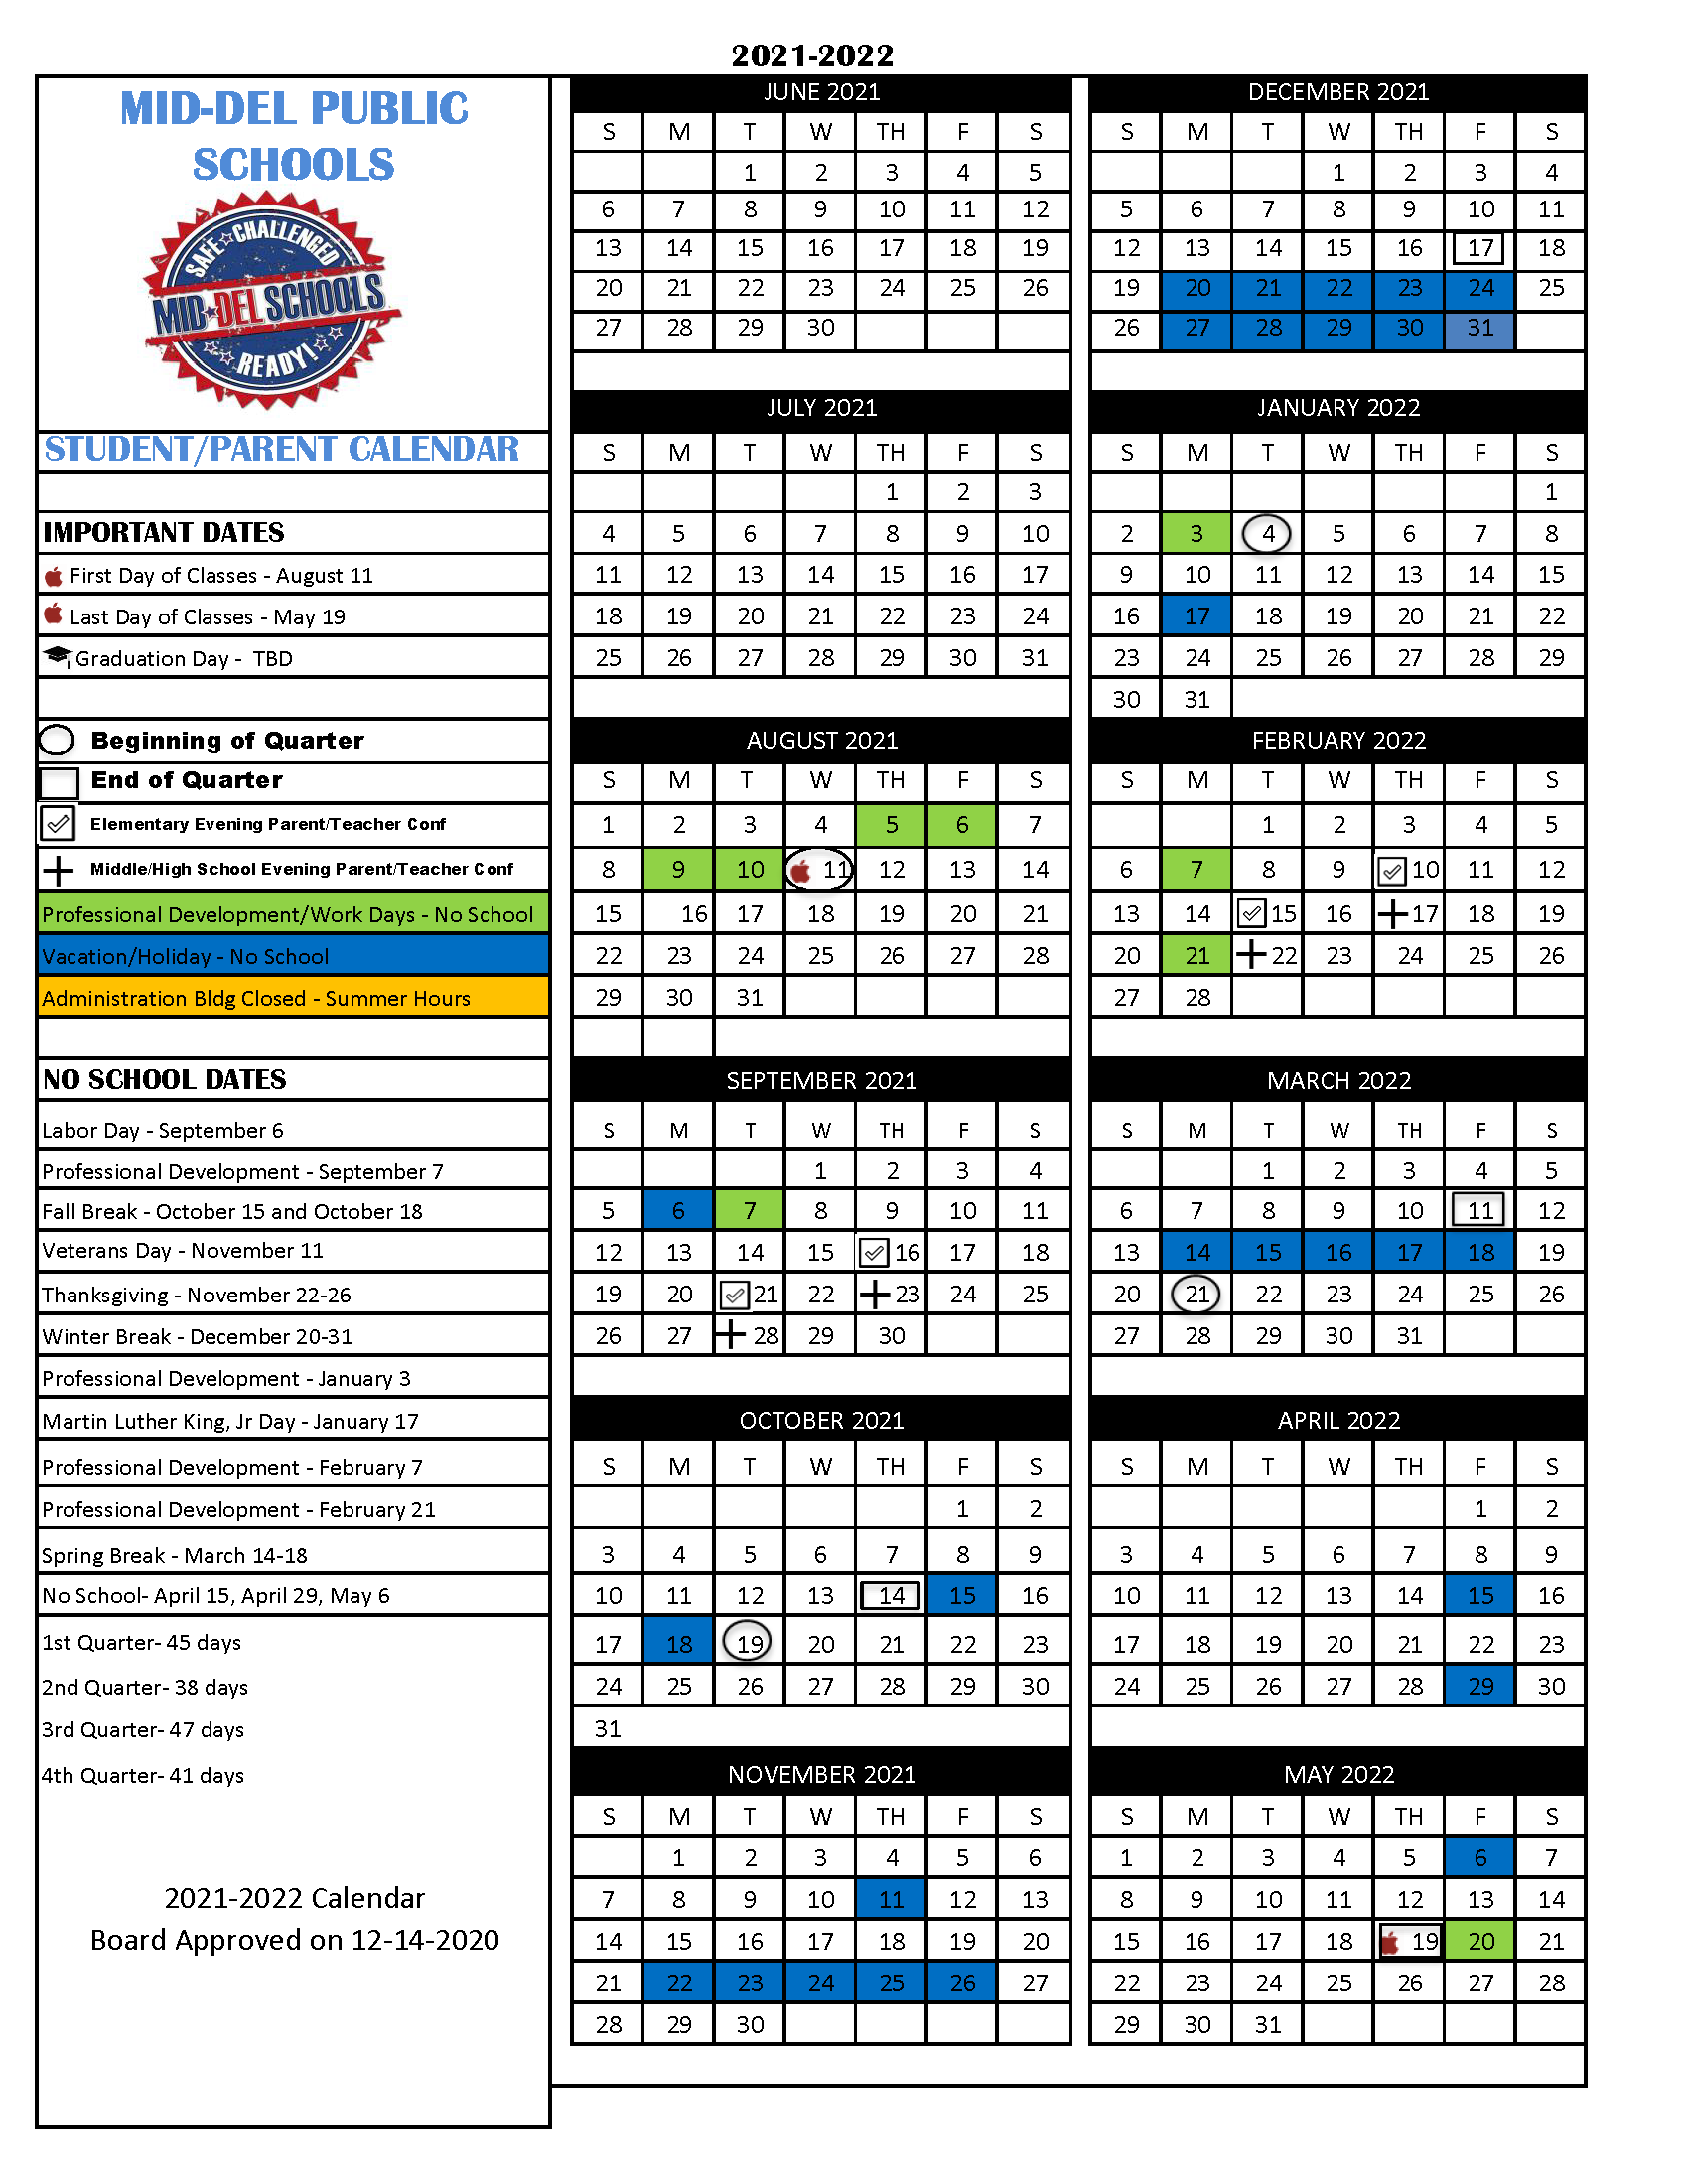 Okstate Academic Calendar 2022 2021-2022 School Calendar | Mid-Del School District